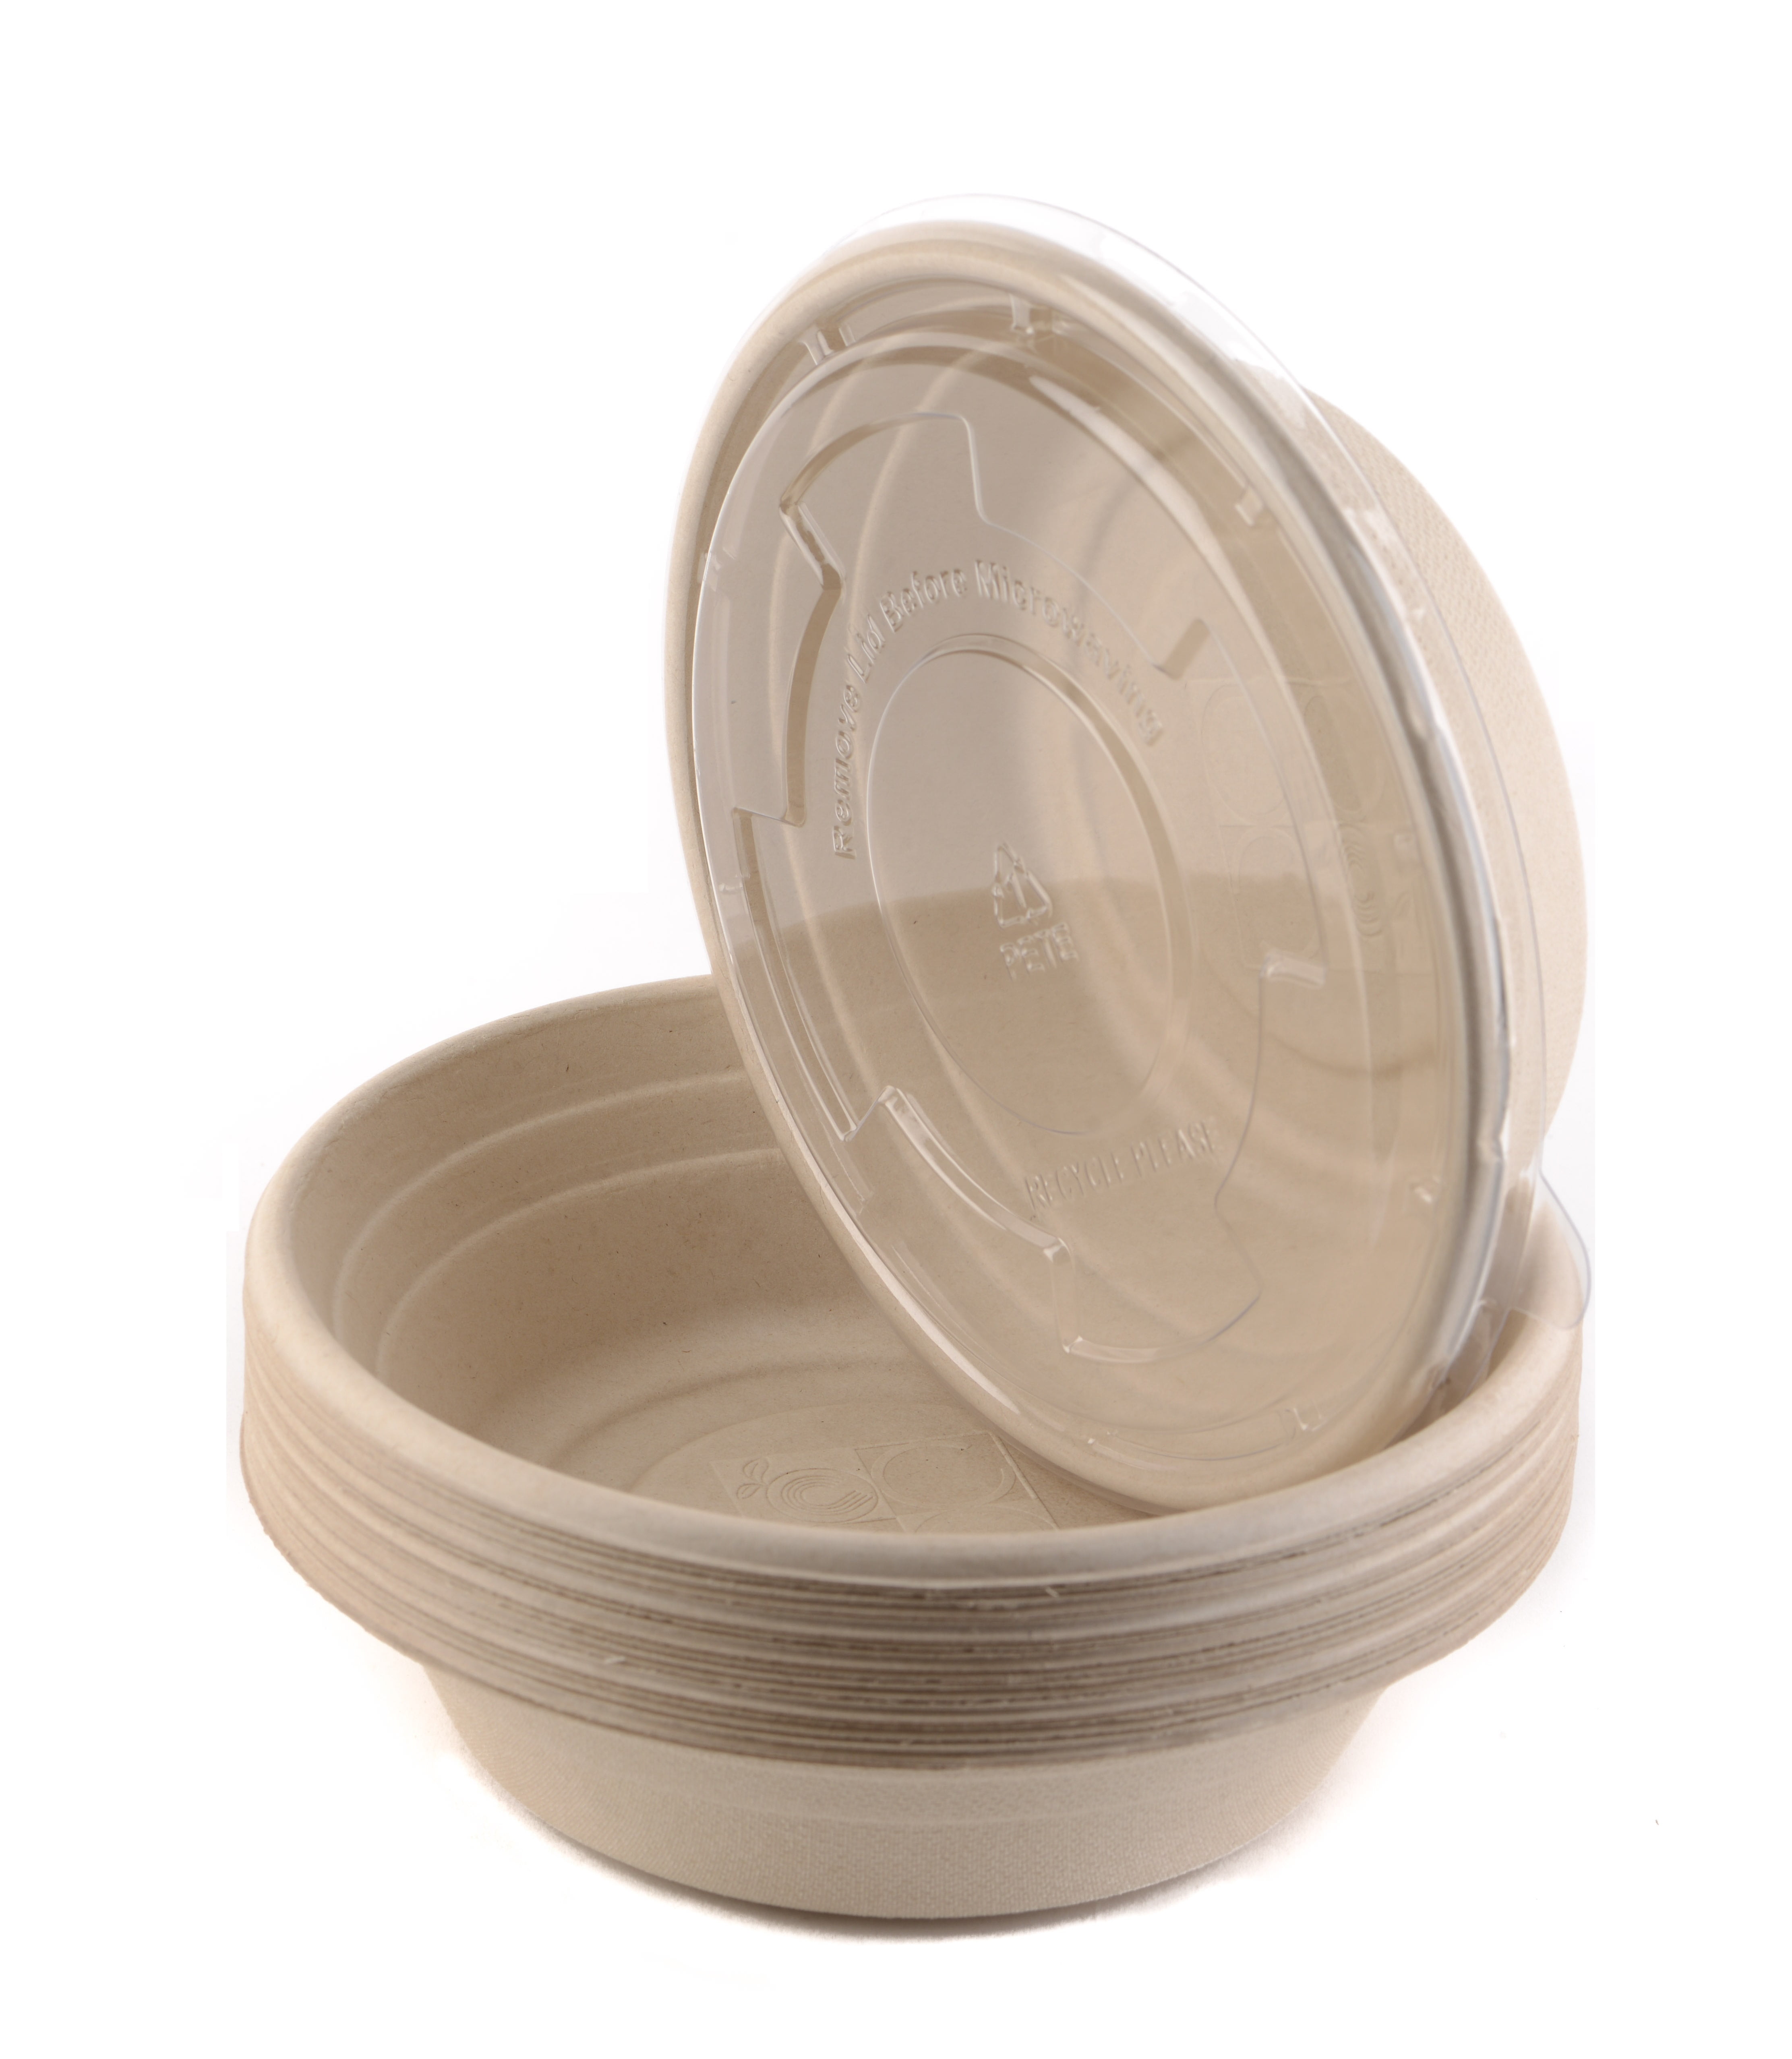 Restaurantware Lids ONLY: Pulp Tek Clear Plastic Dome Lids, Fits 8 Ounce Bagasse Bowls - 100 Recyclable Lids for Biodegradable Salad Bowls - BPA